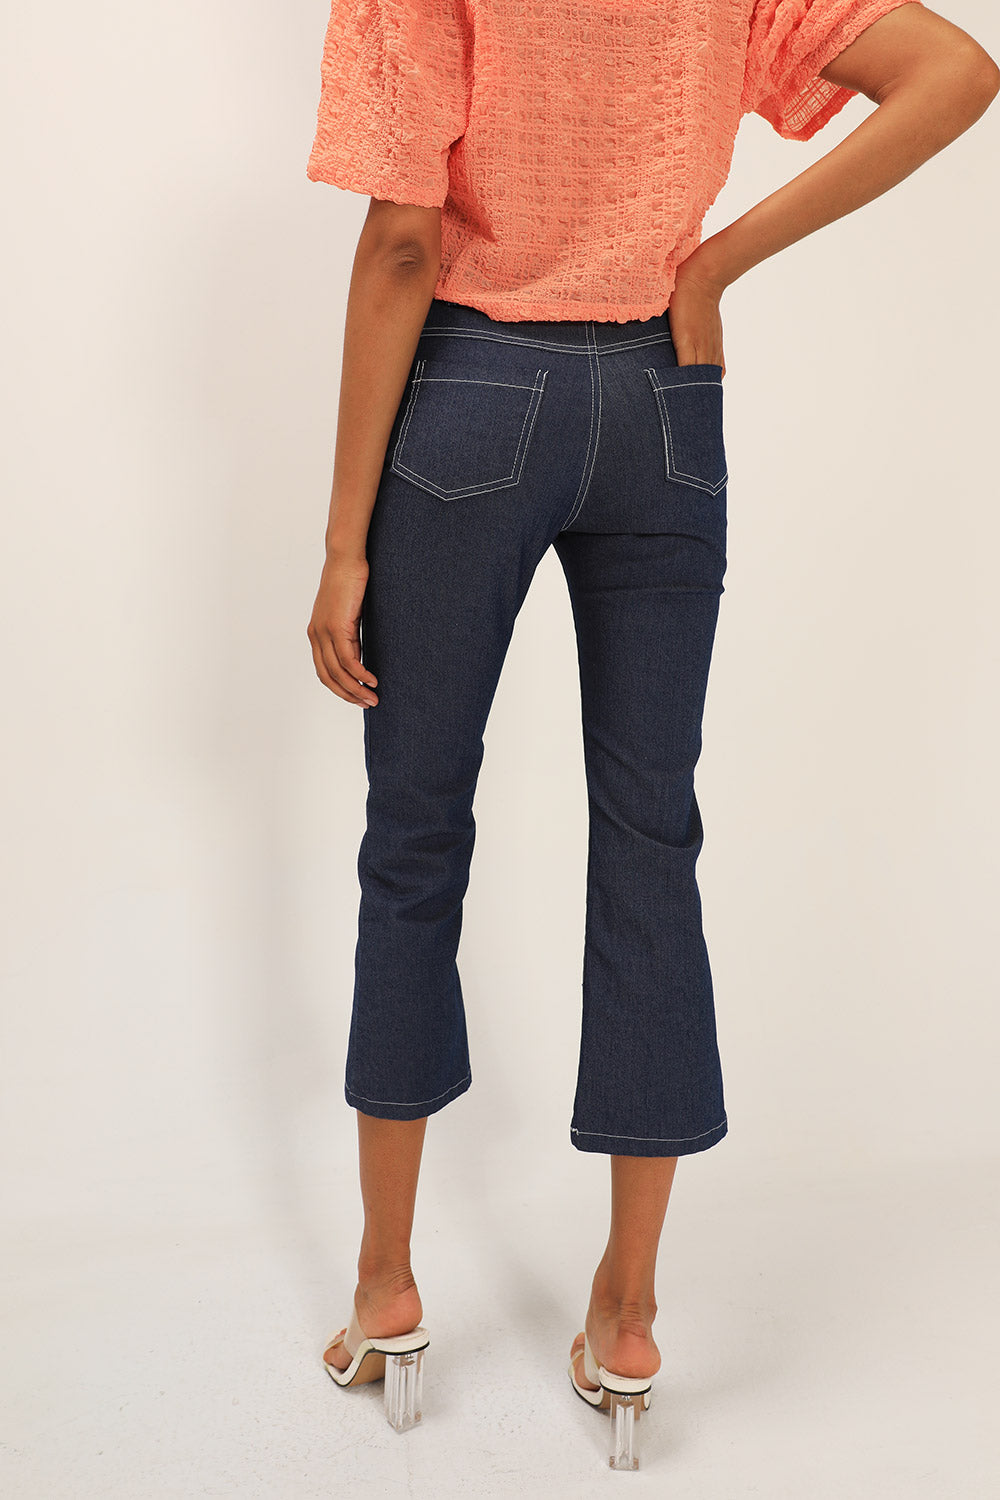 storets.com Siena Bootcut Jeans